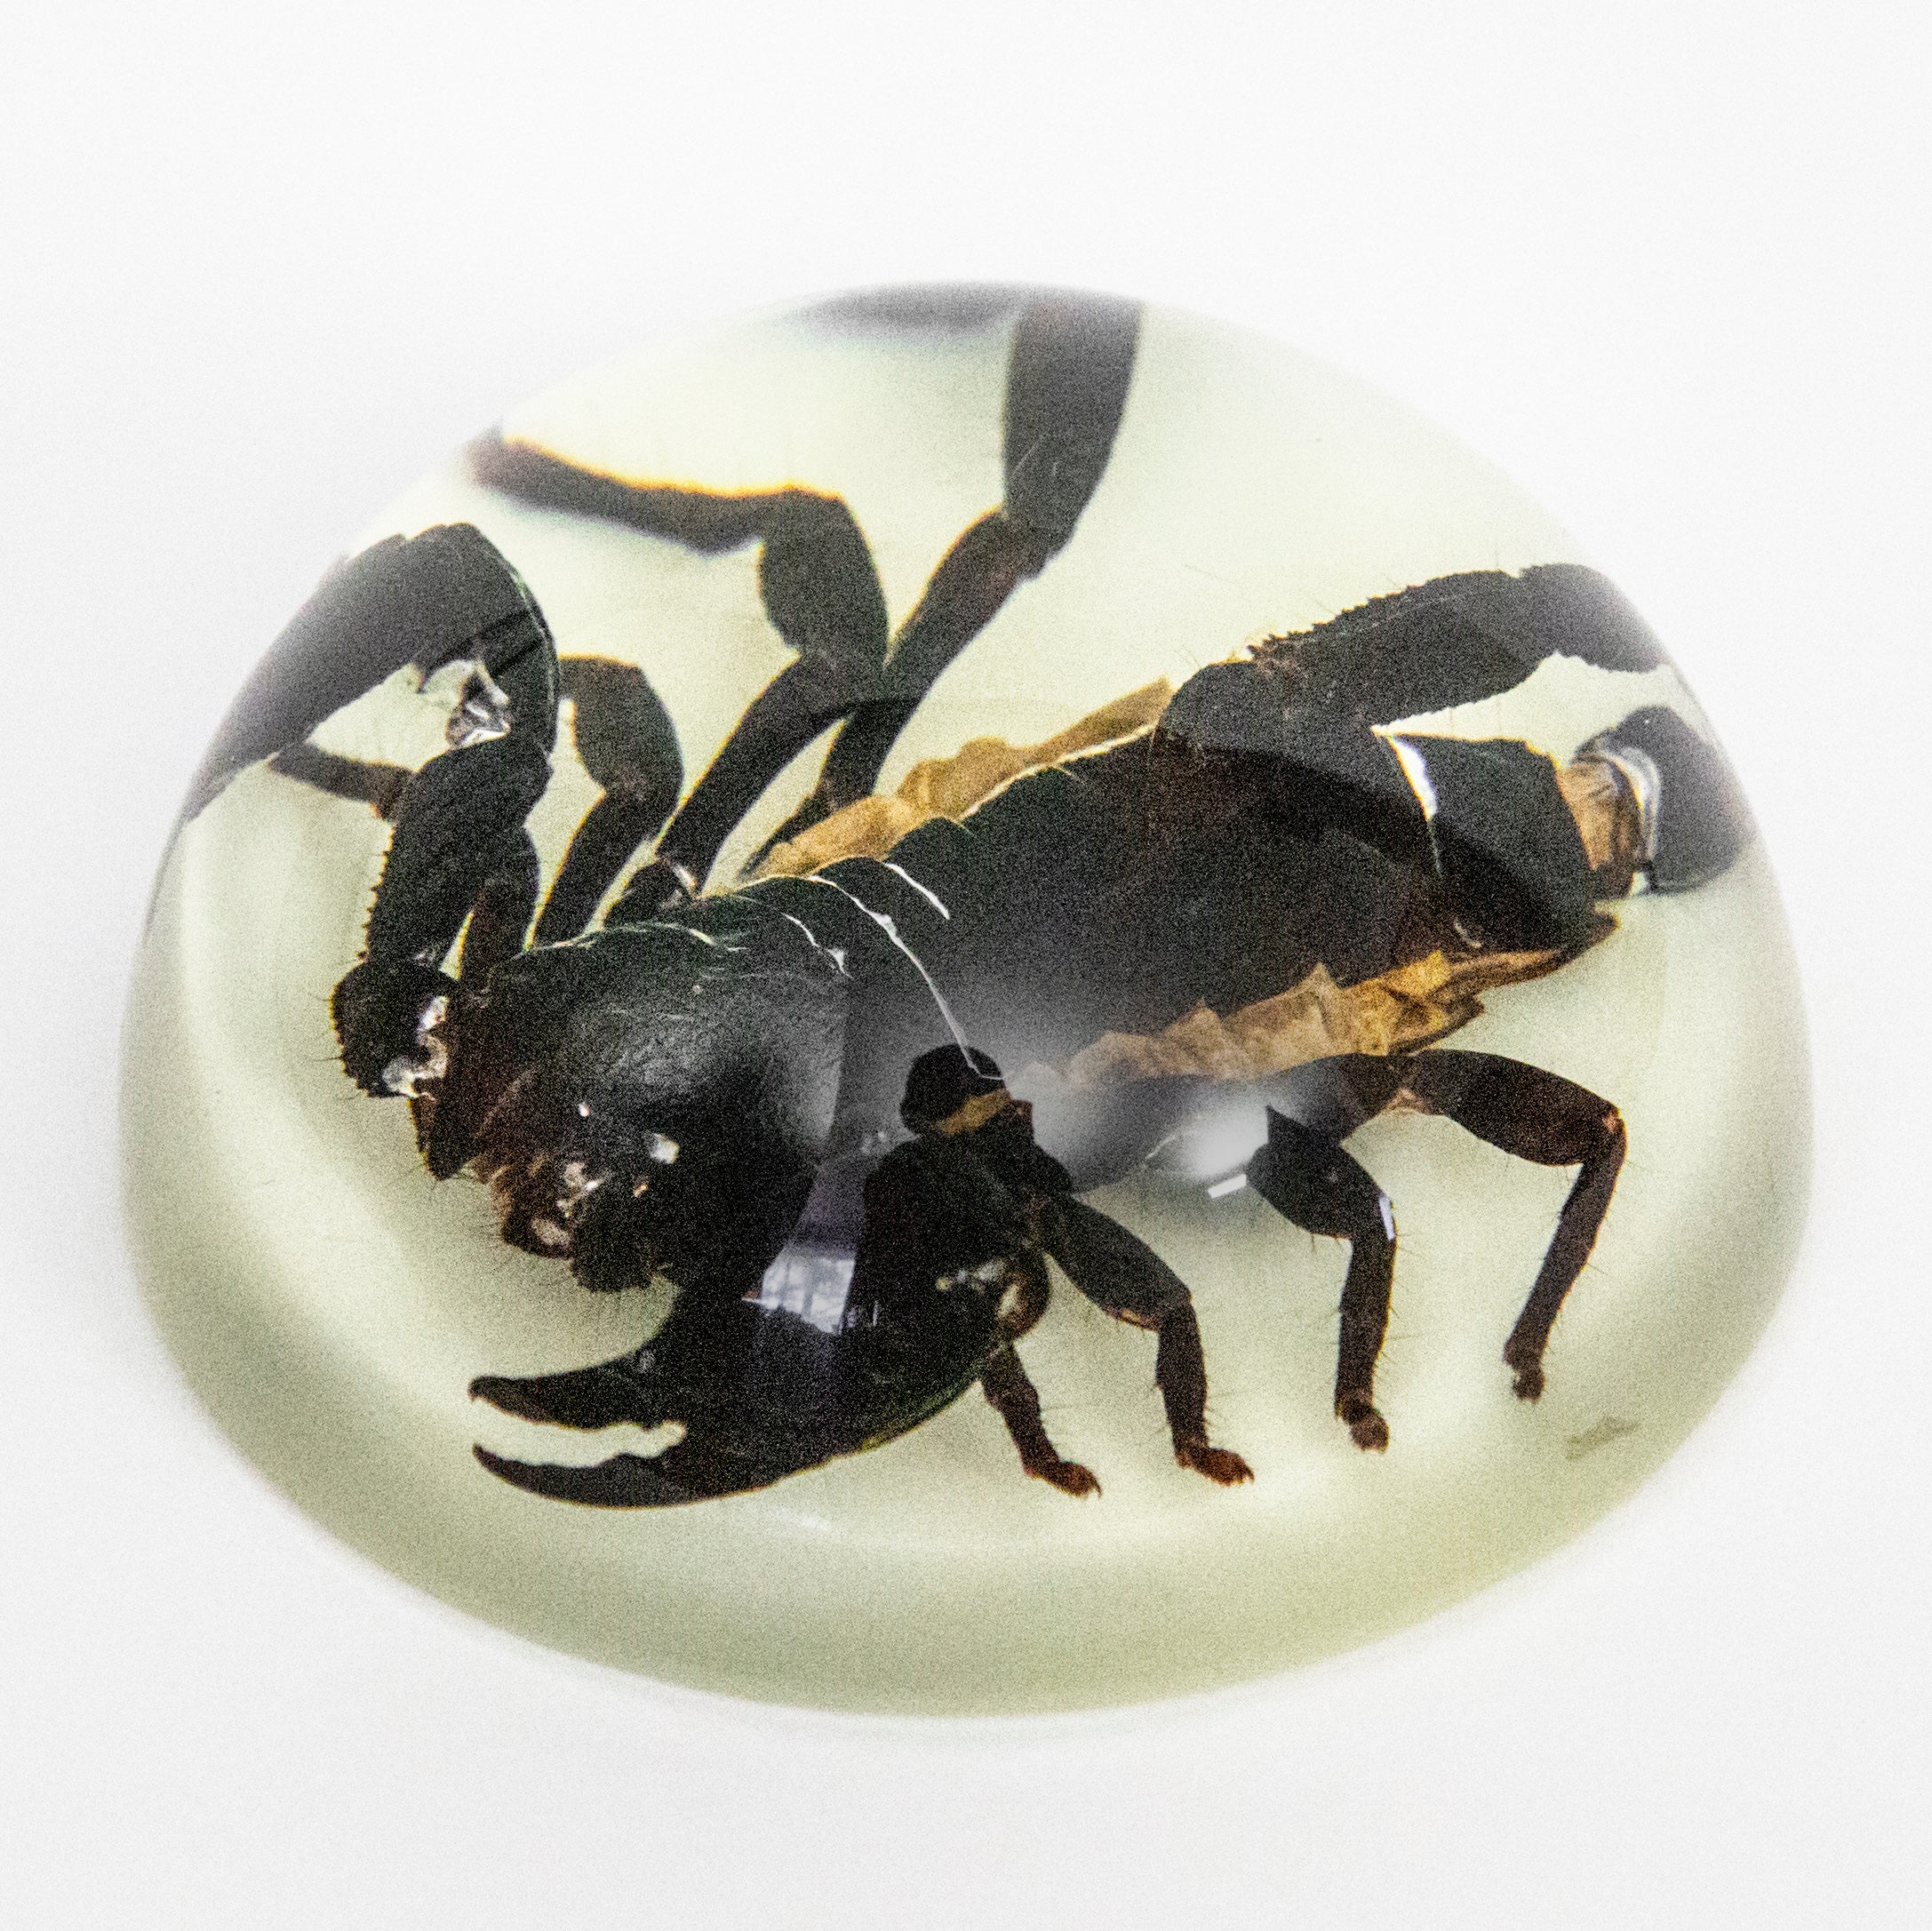 Black Scorpion Glow in the Dark Paperweight